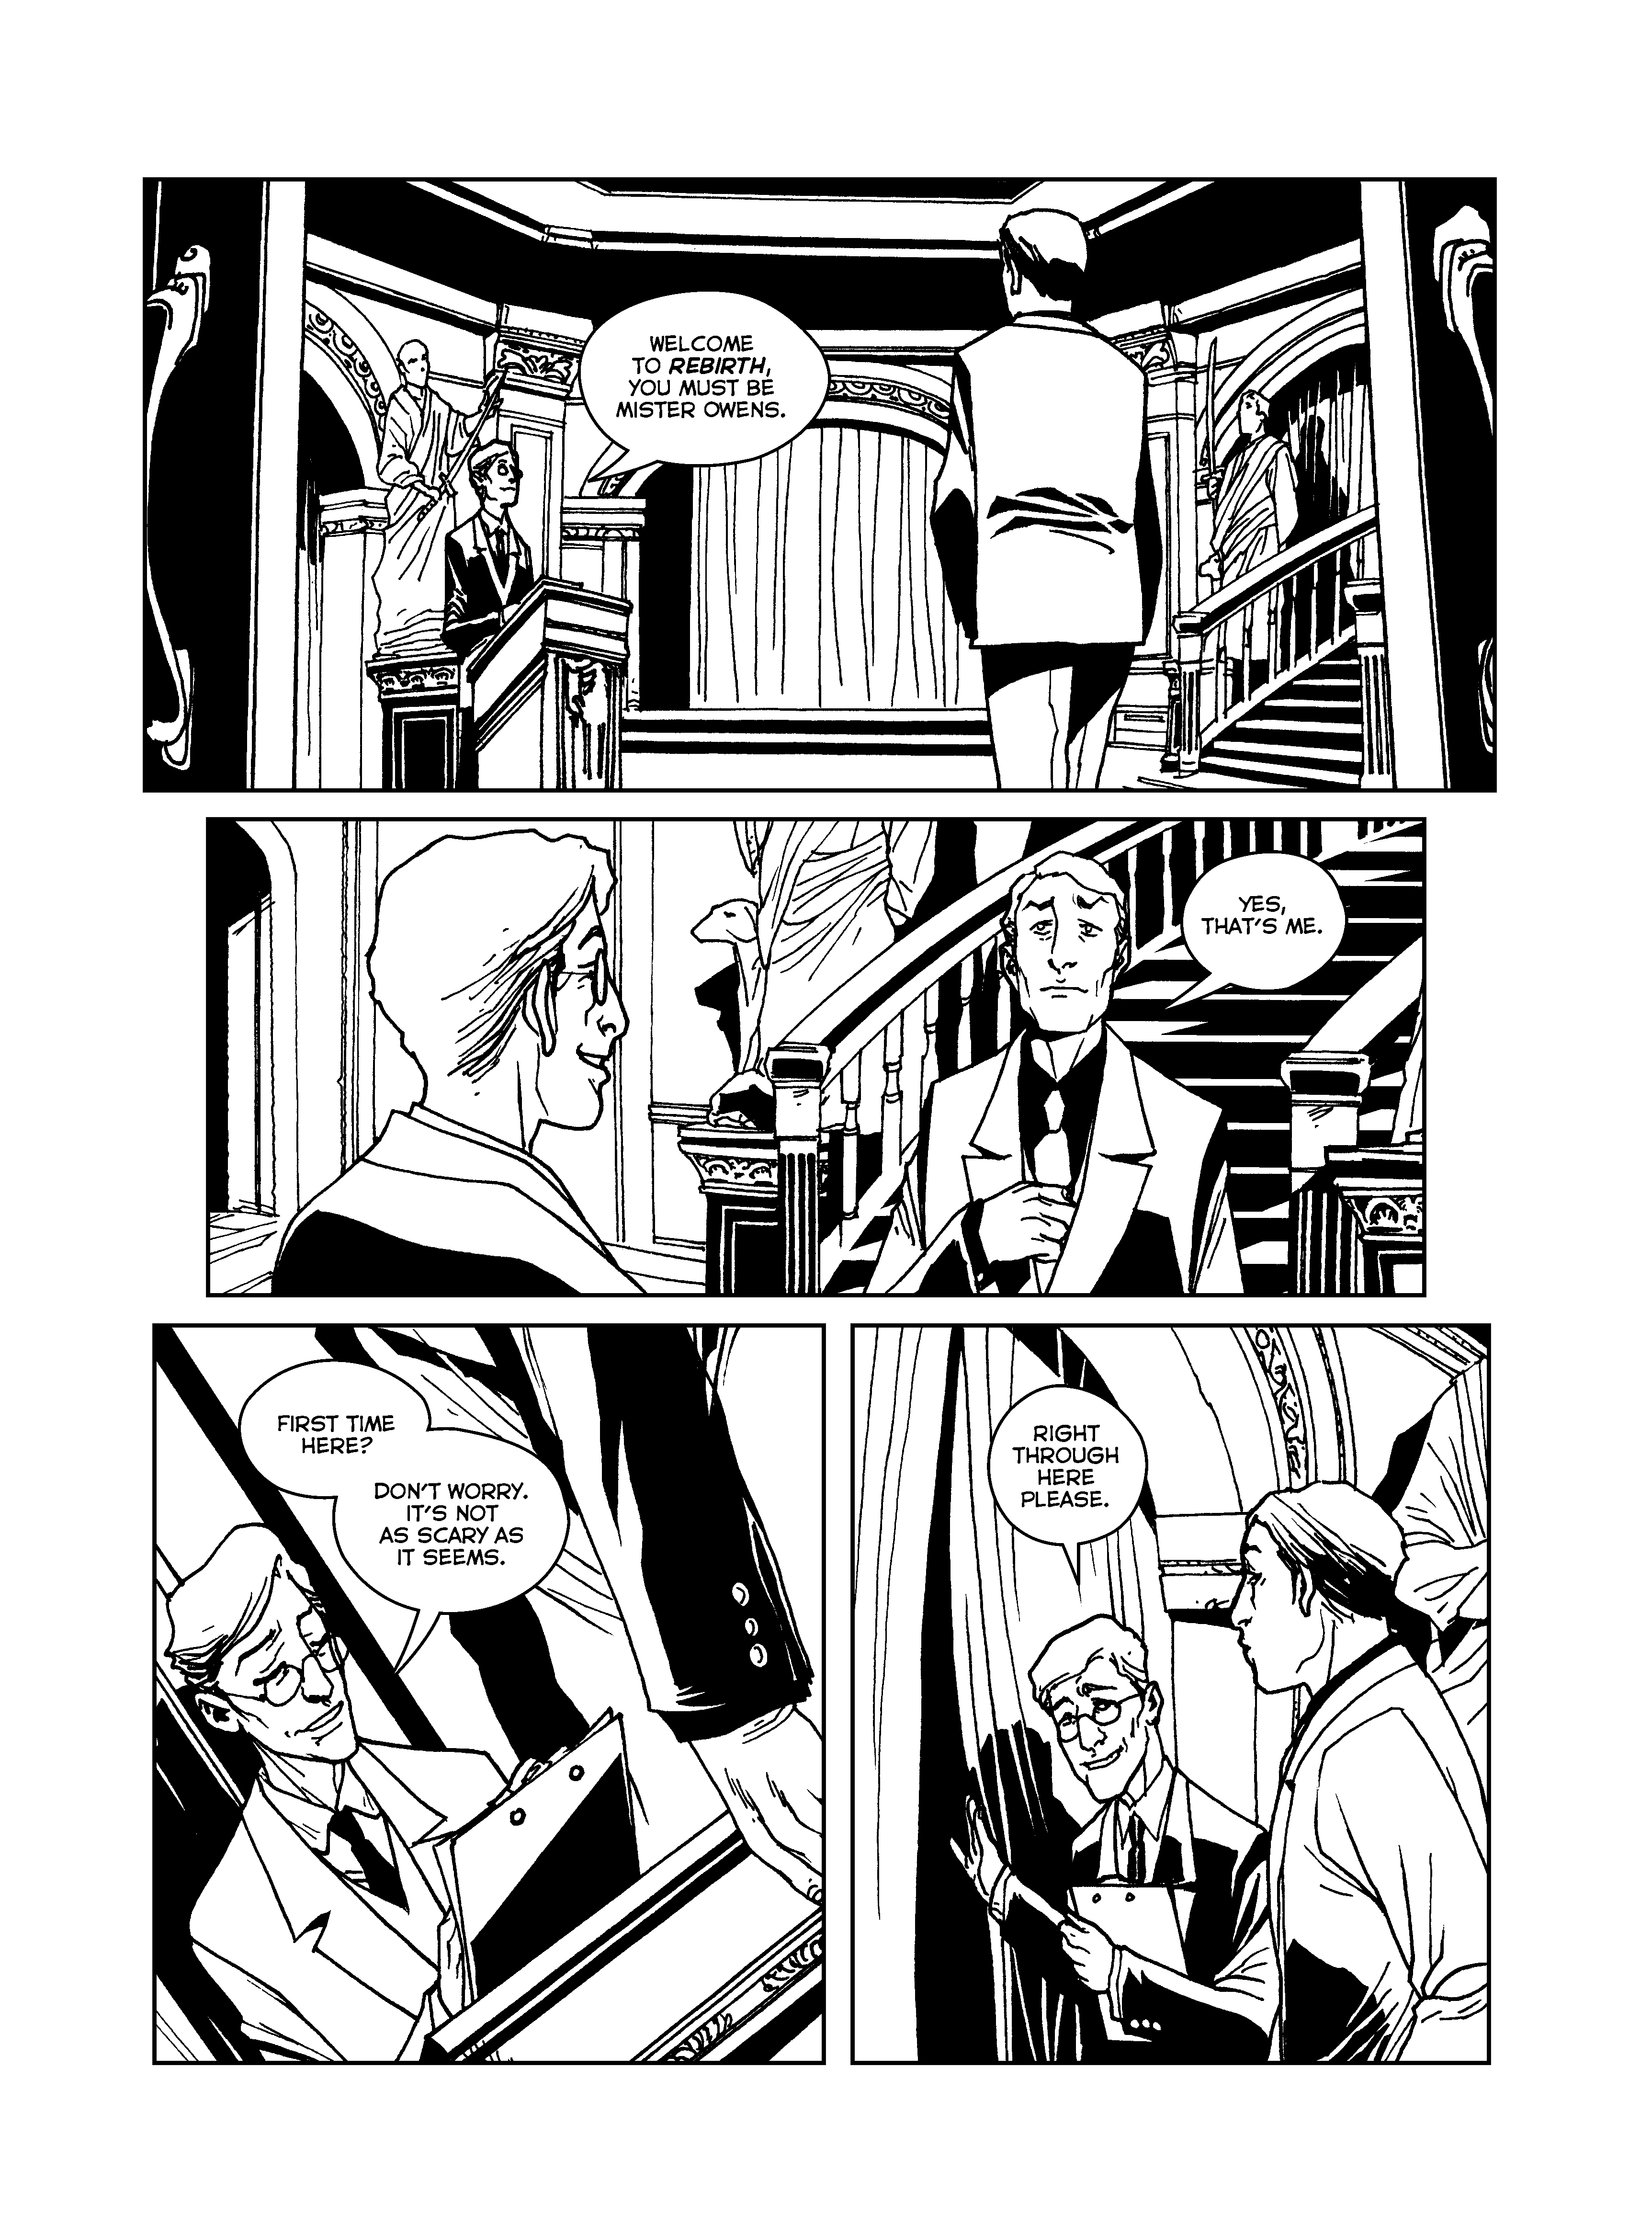 Rebirth, page 1